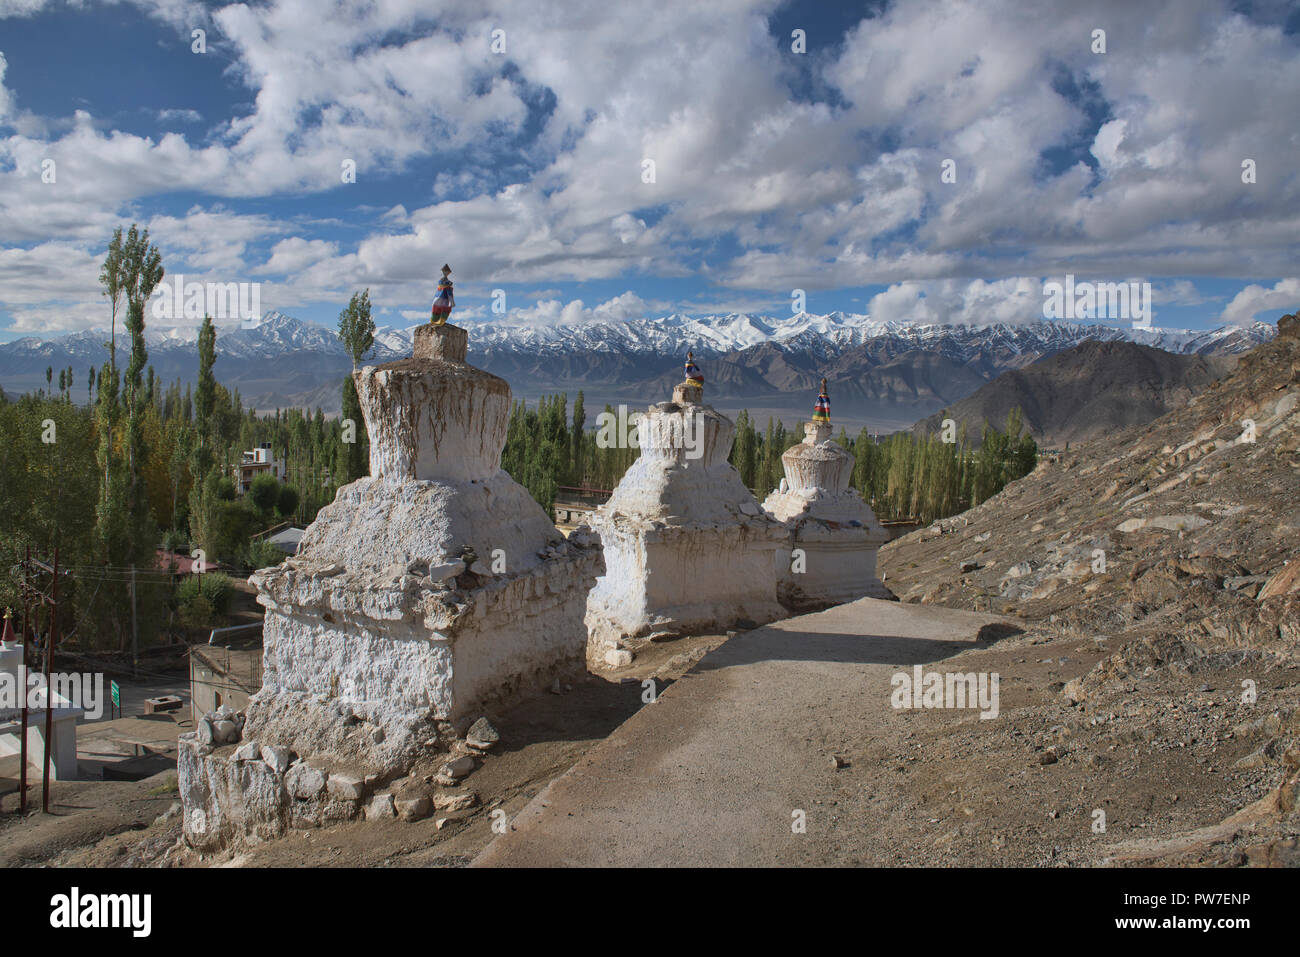 The Stok Range seen behind the Shanti Stupa chortens, Leh, Ladakh, India Stock Photo